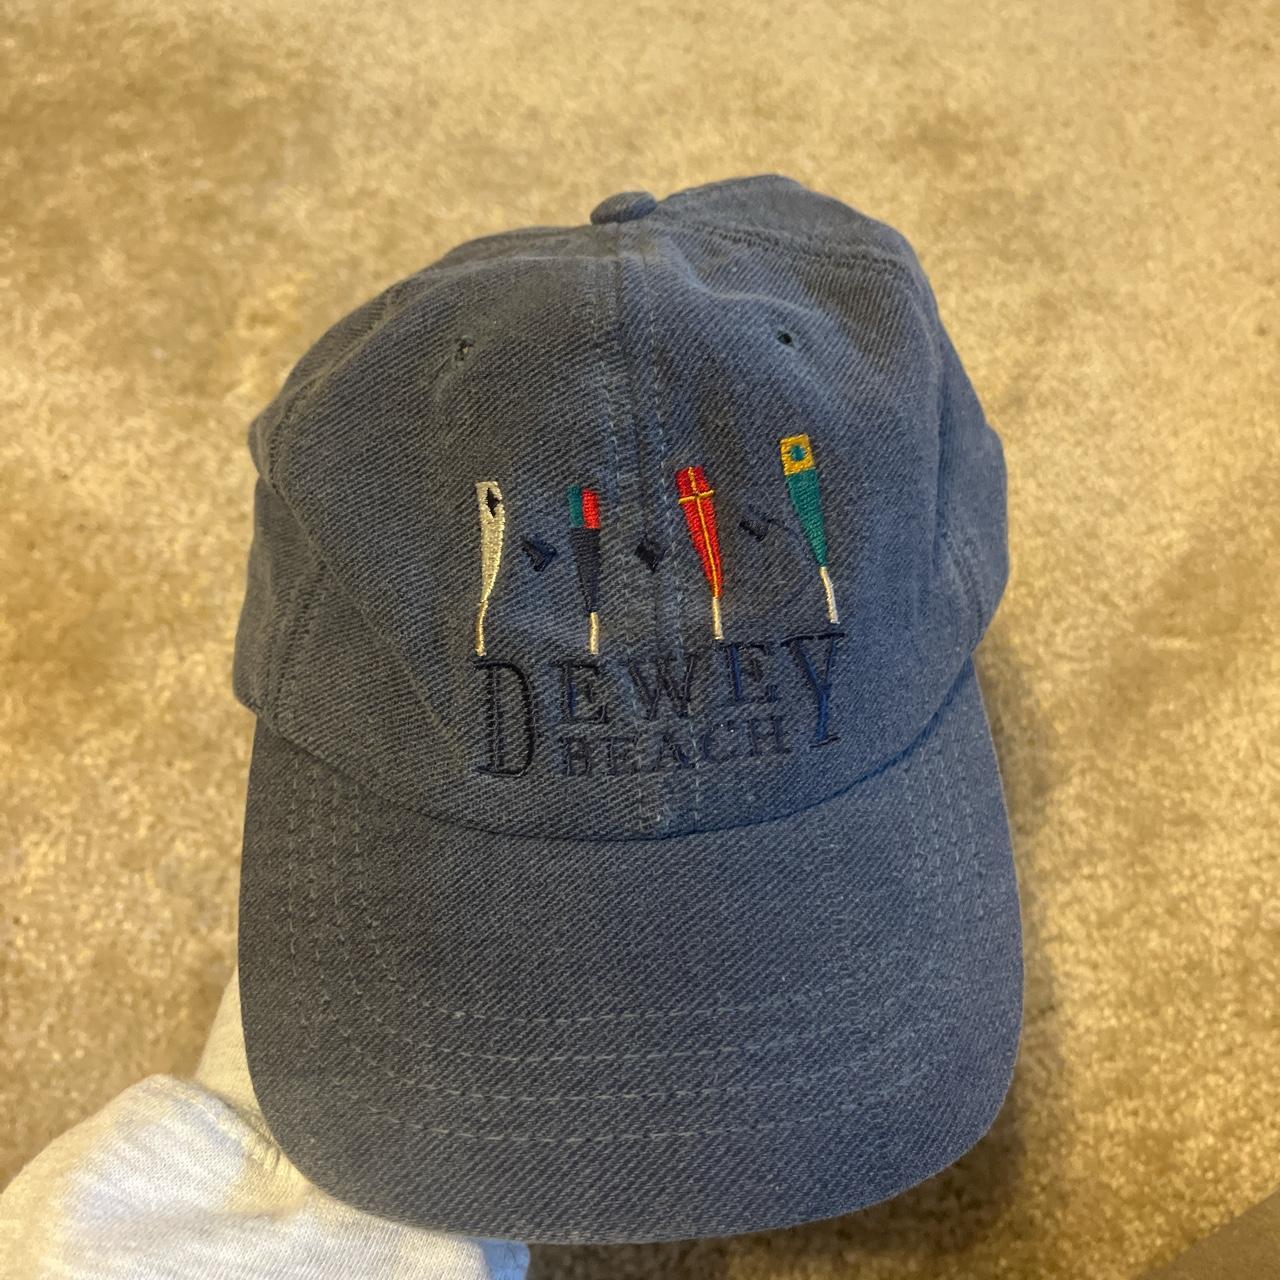 Men's cap one size fits all - Depop